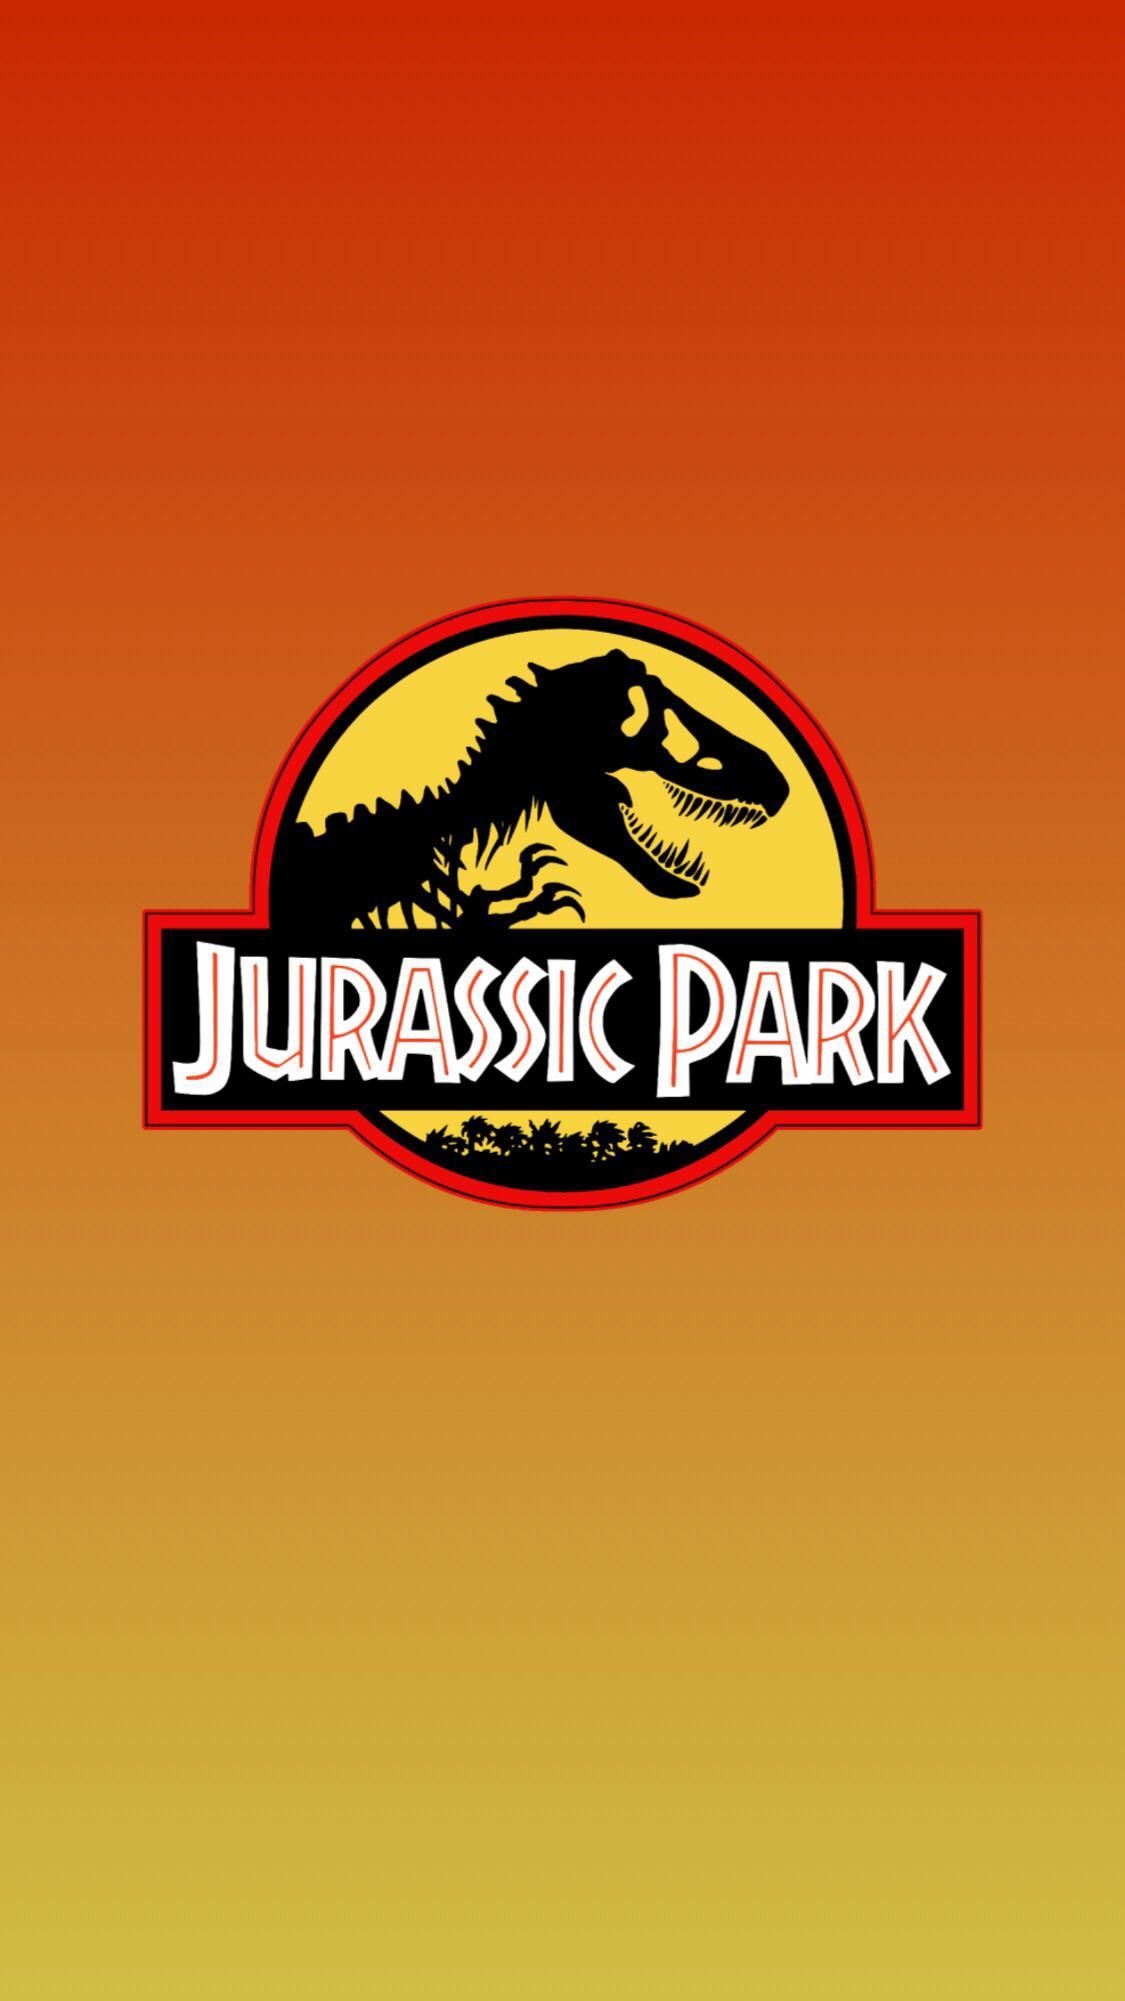 Jurassic Park. Jurassic park poster, Jurassic park, Jurassic park movie